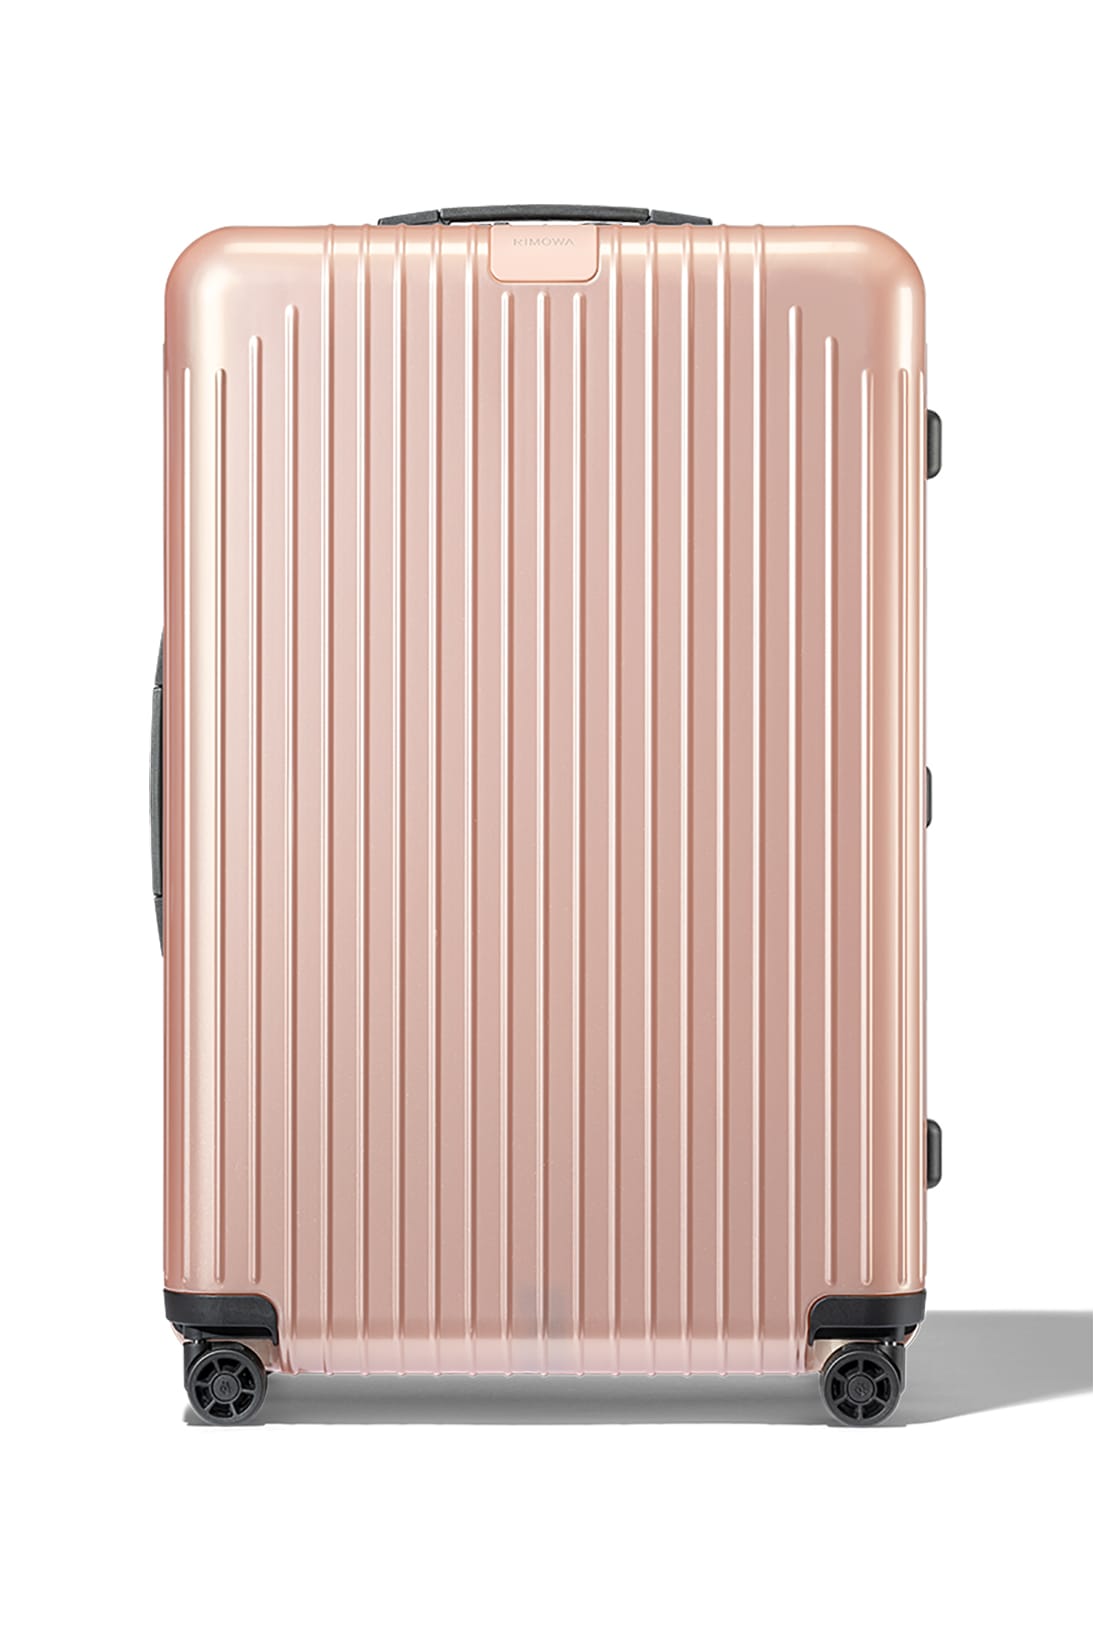 rimowa luggage rose gold